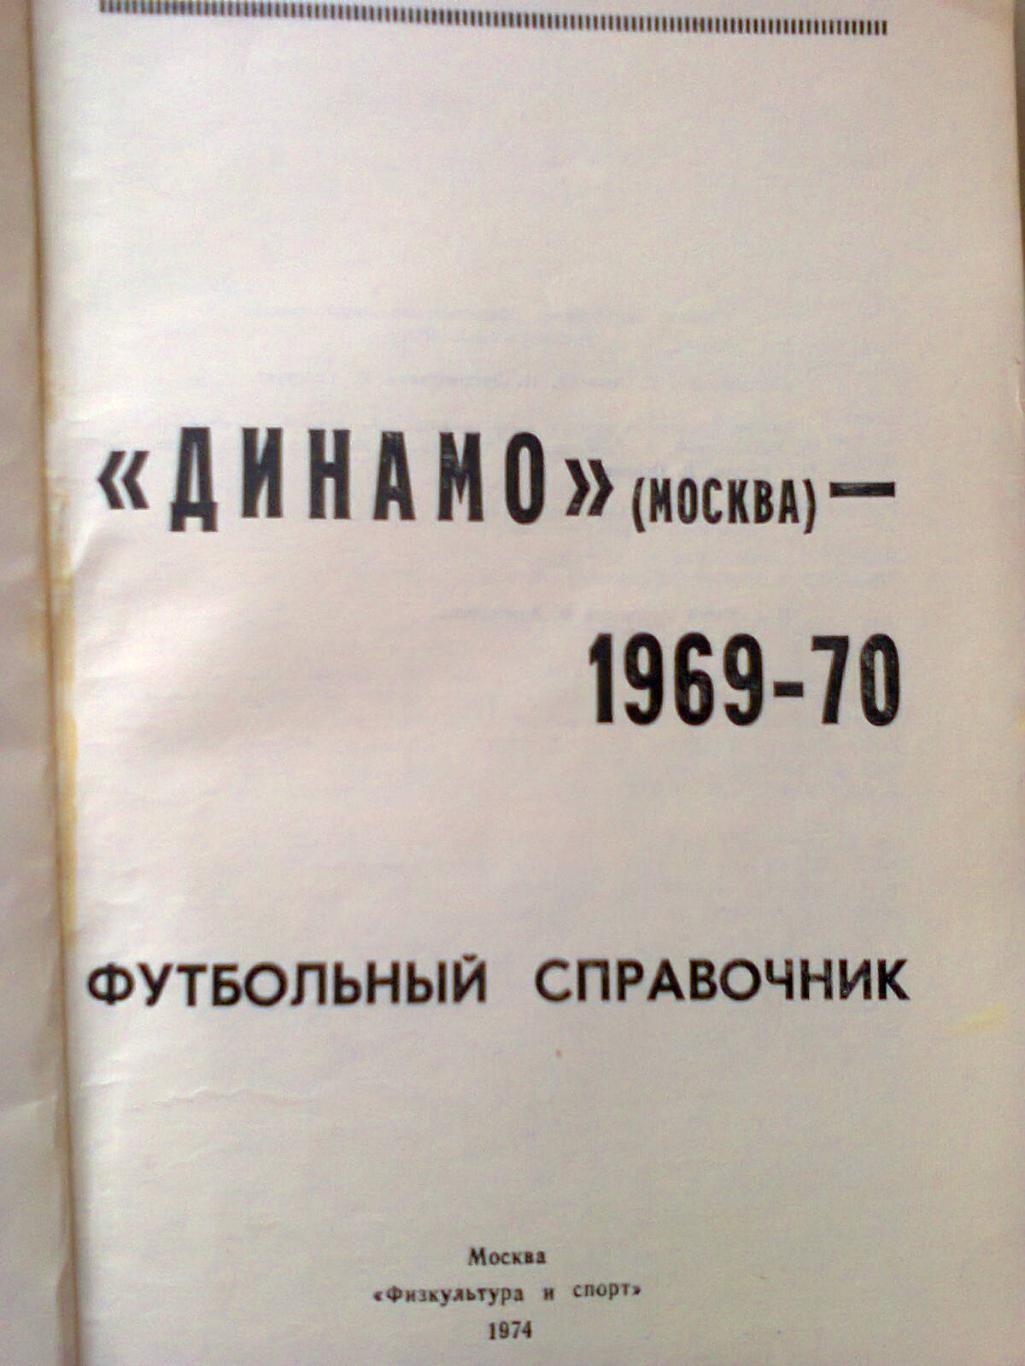 динамо москва календарь справочник 1969-1970 2